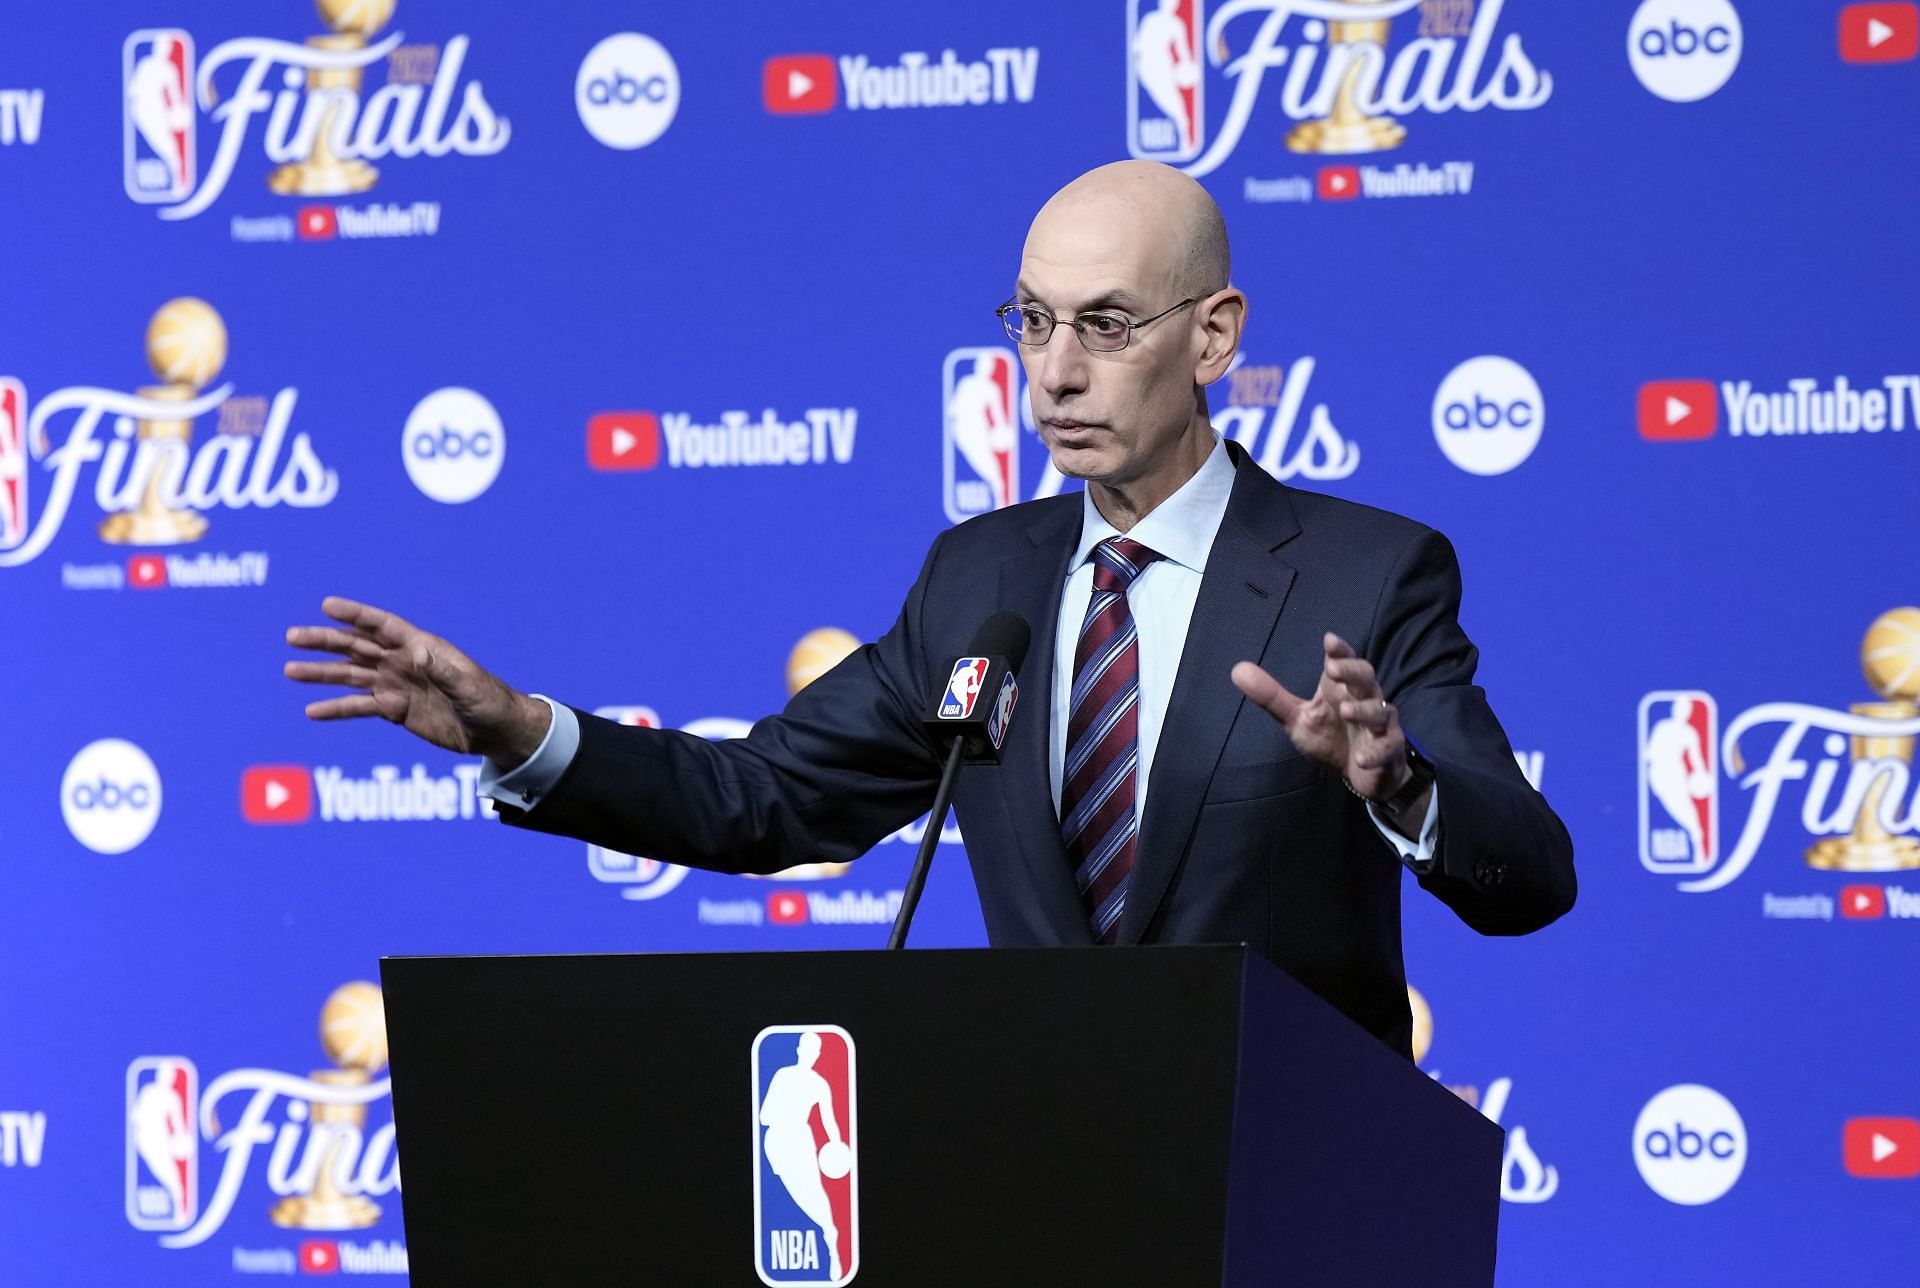 NBA commissioner Adam Silver at a press conference